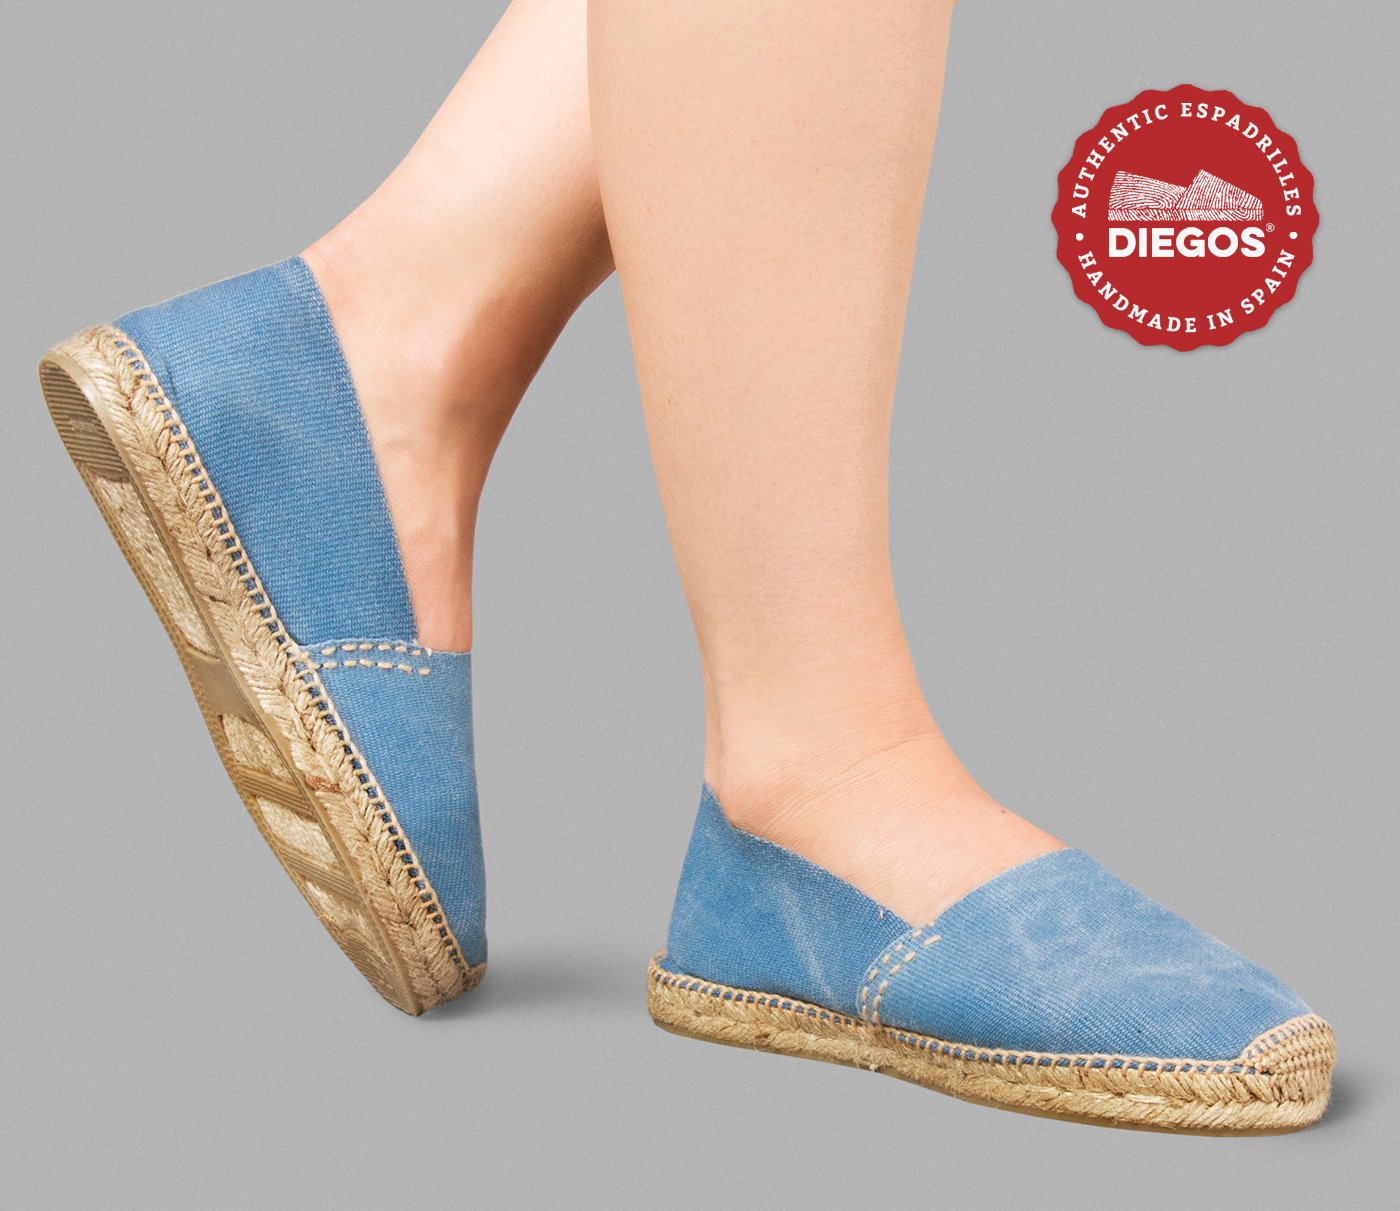 Washed look blue espadrilles for women | DIEGOS� hand espadrilles – diegos.com